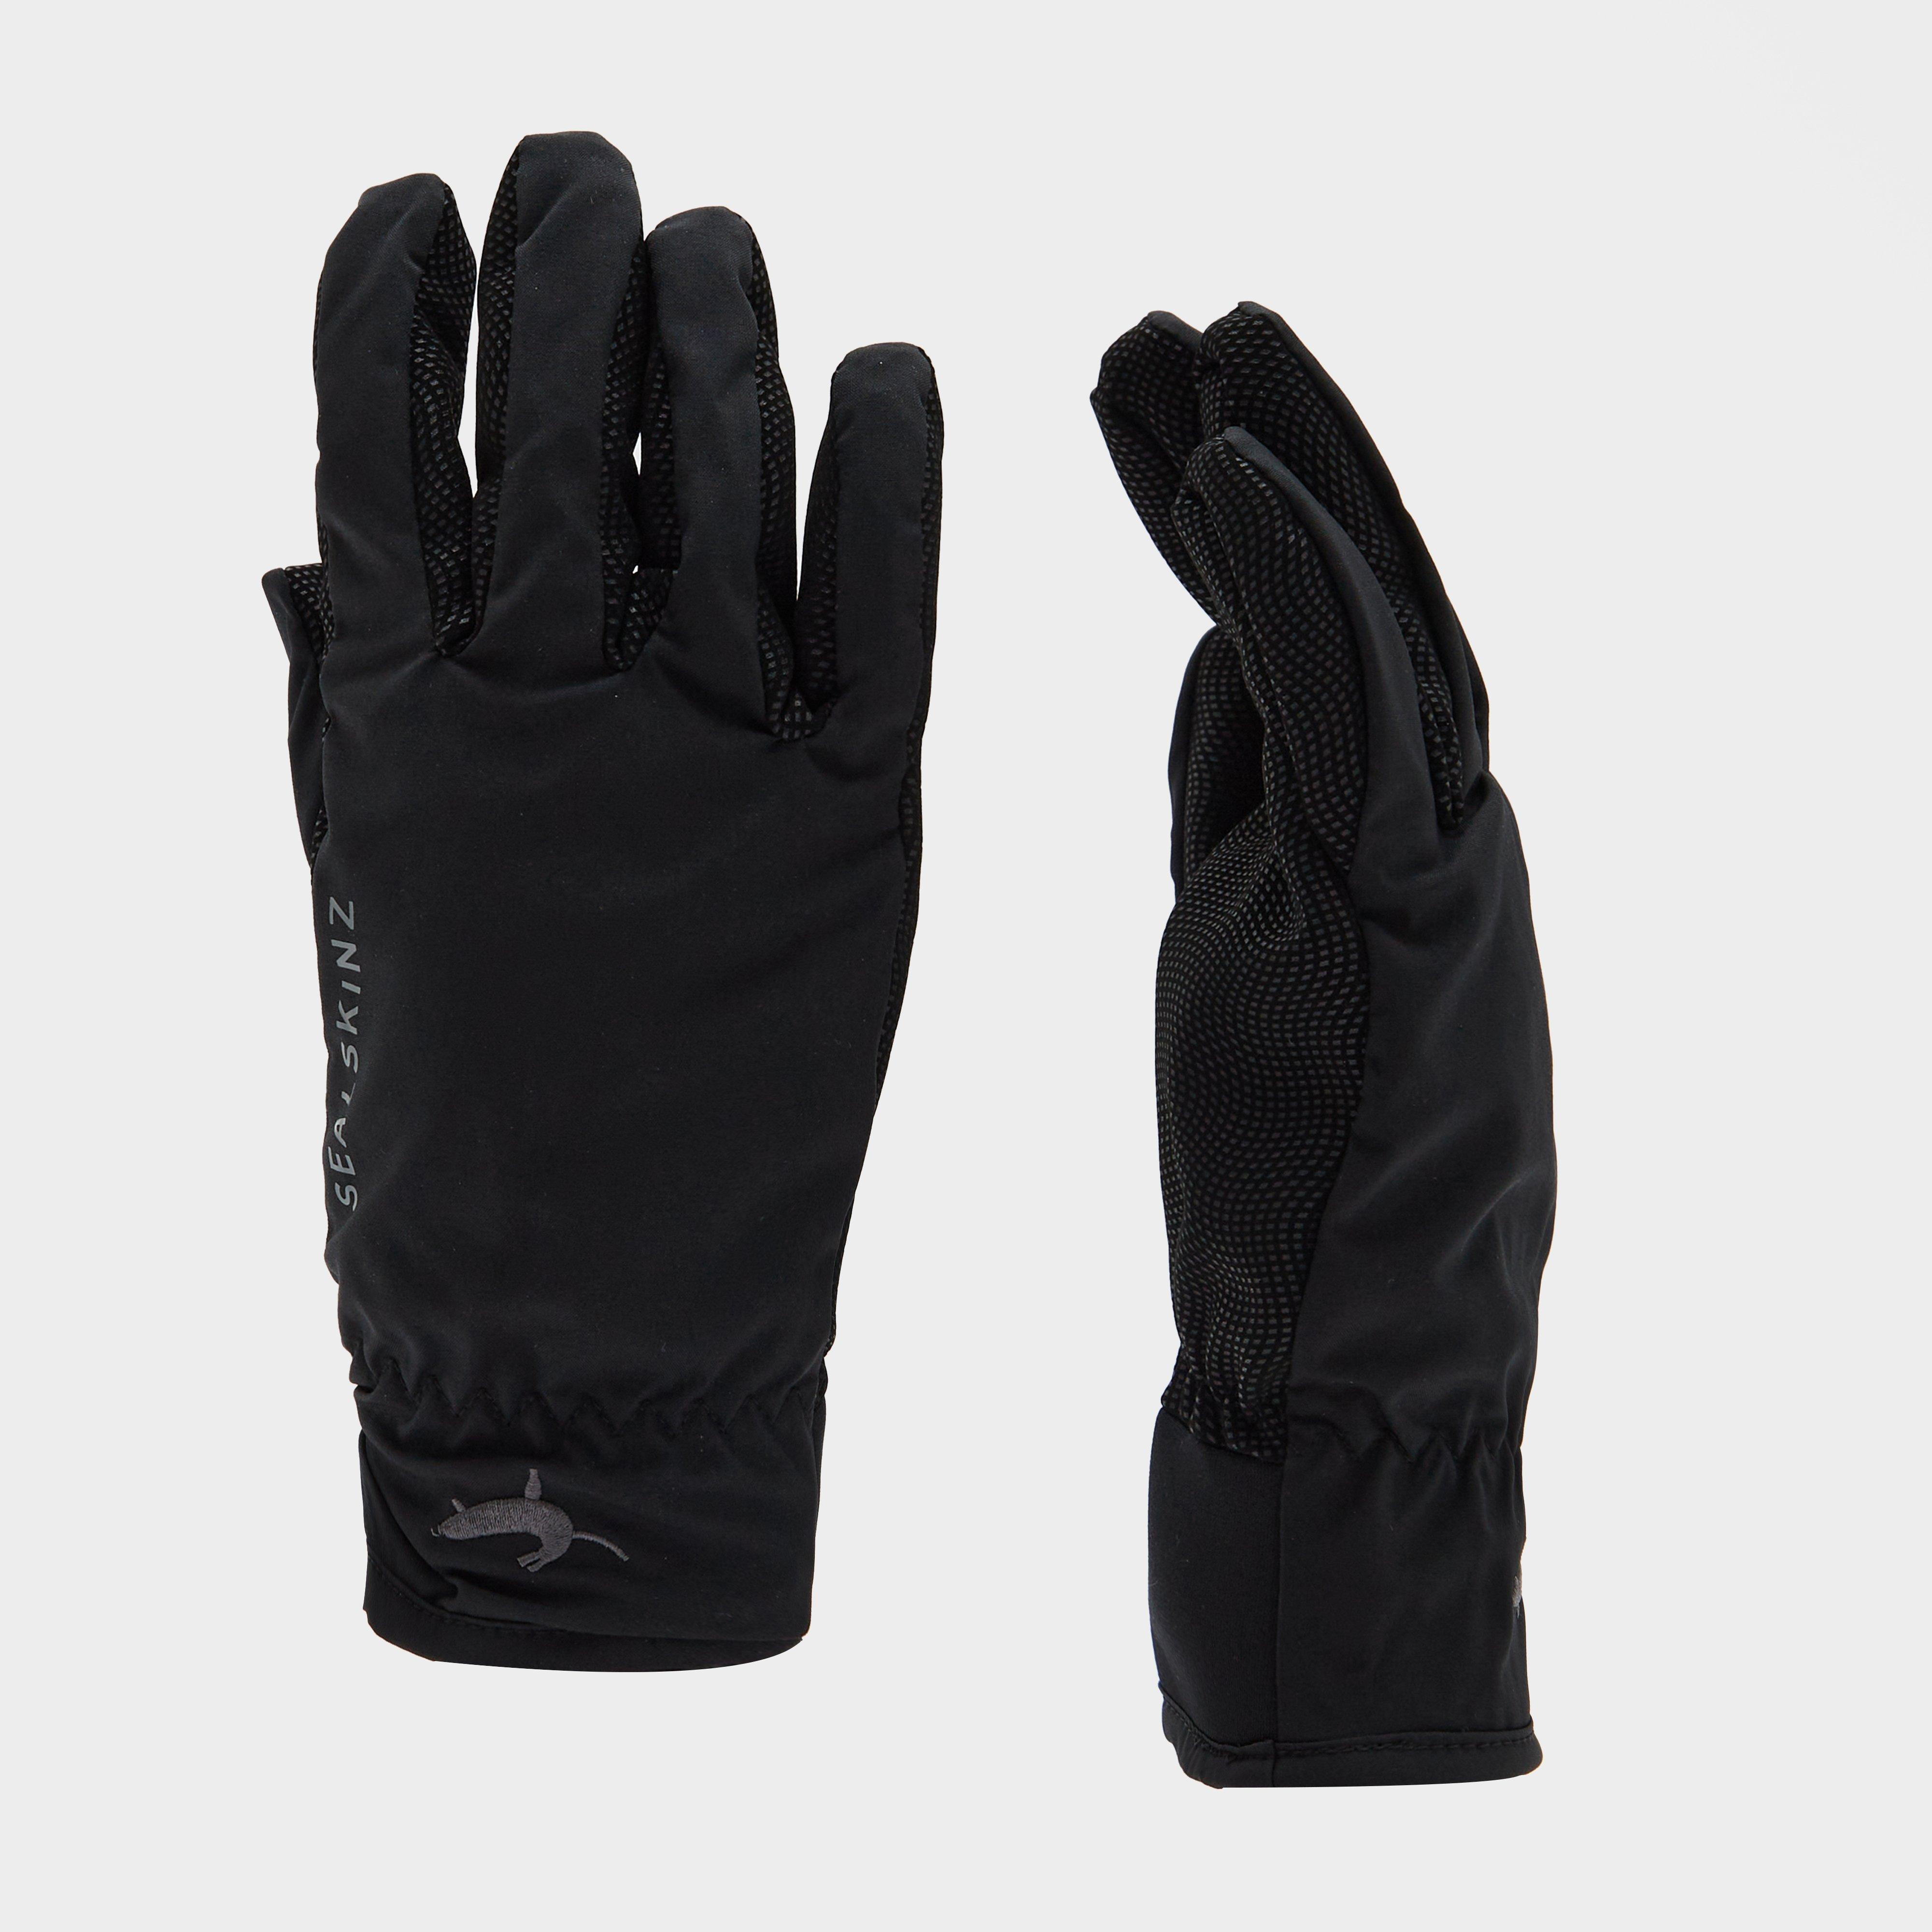 Women's Griston Waterproof Glove - Black product